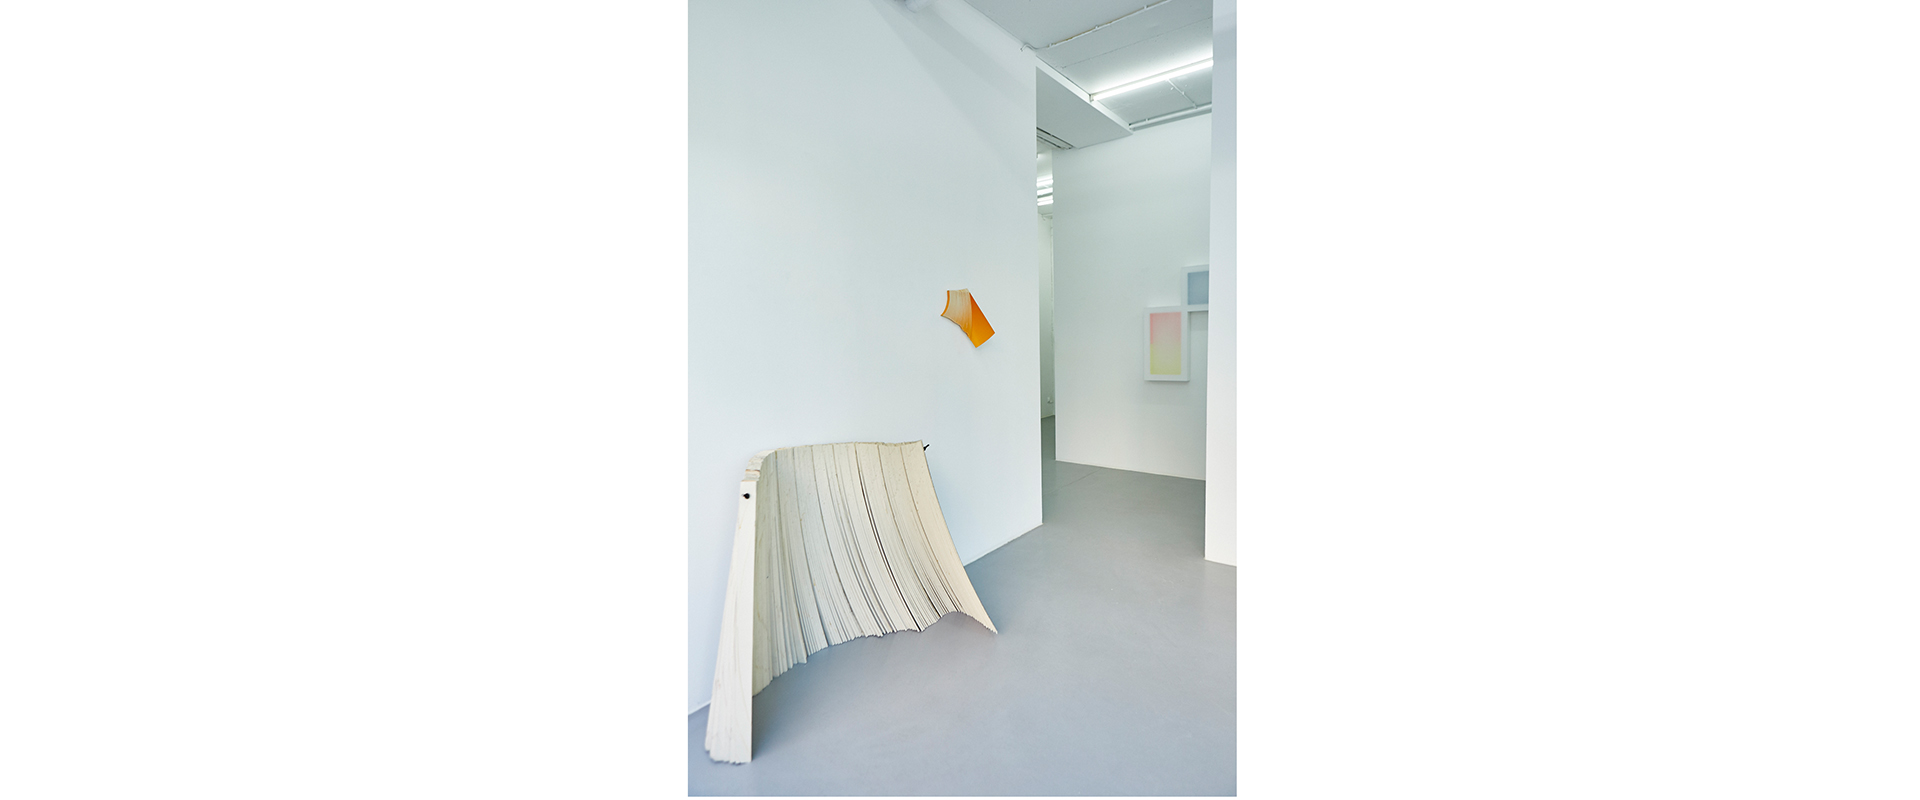 Bender Schwinn Projekt 2, Galerie Renate Bender 2017. Foto: Kathrin Makowski